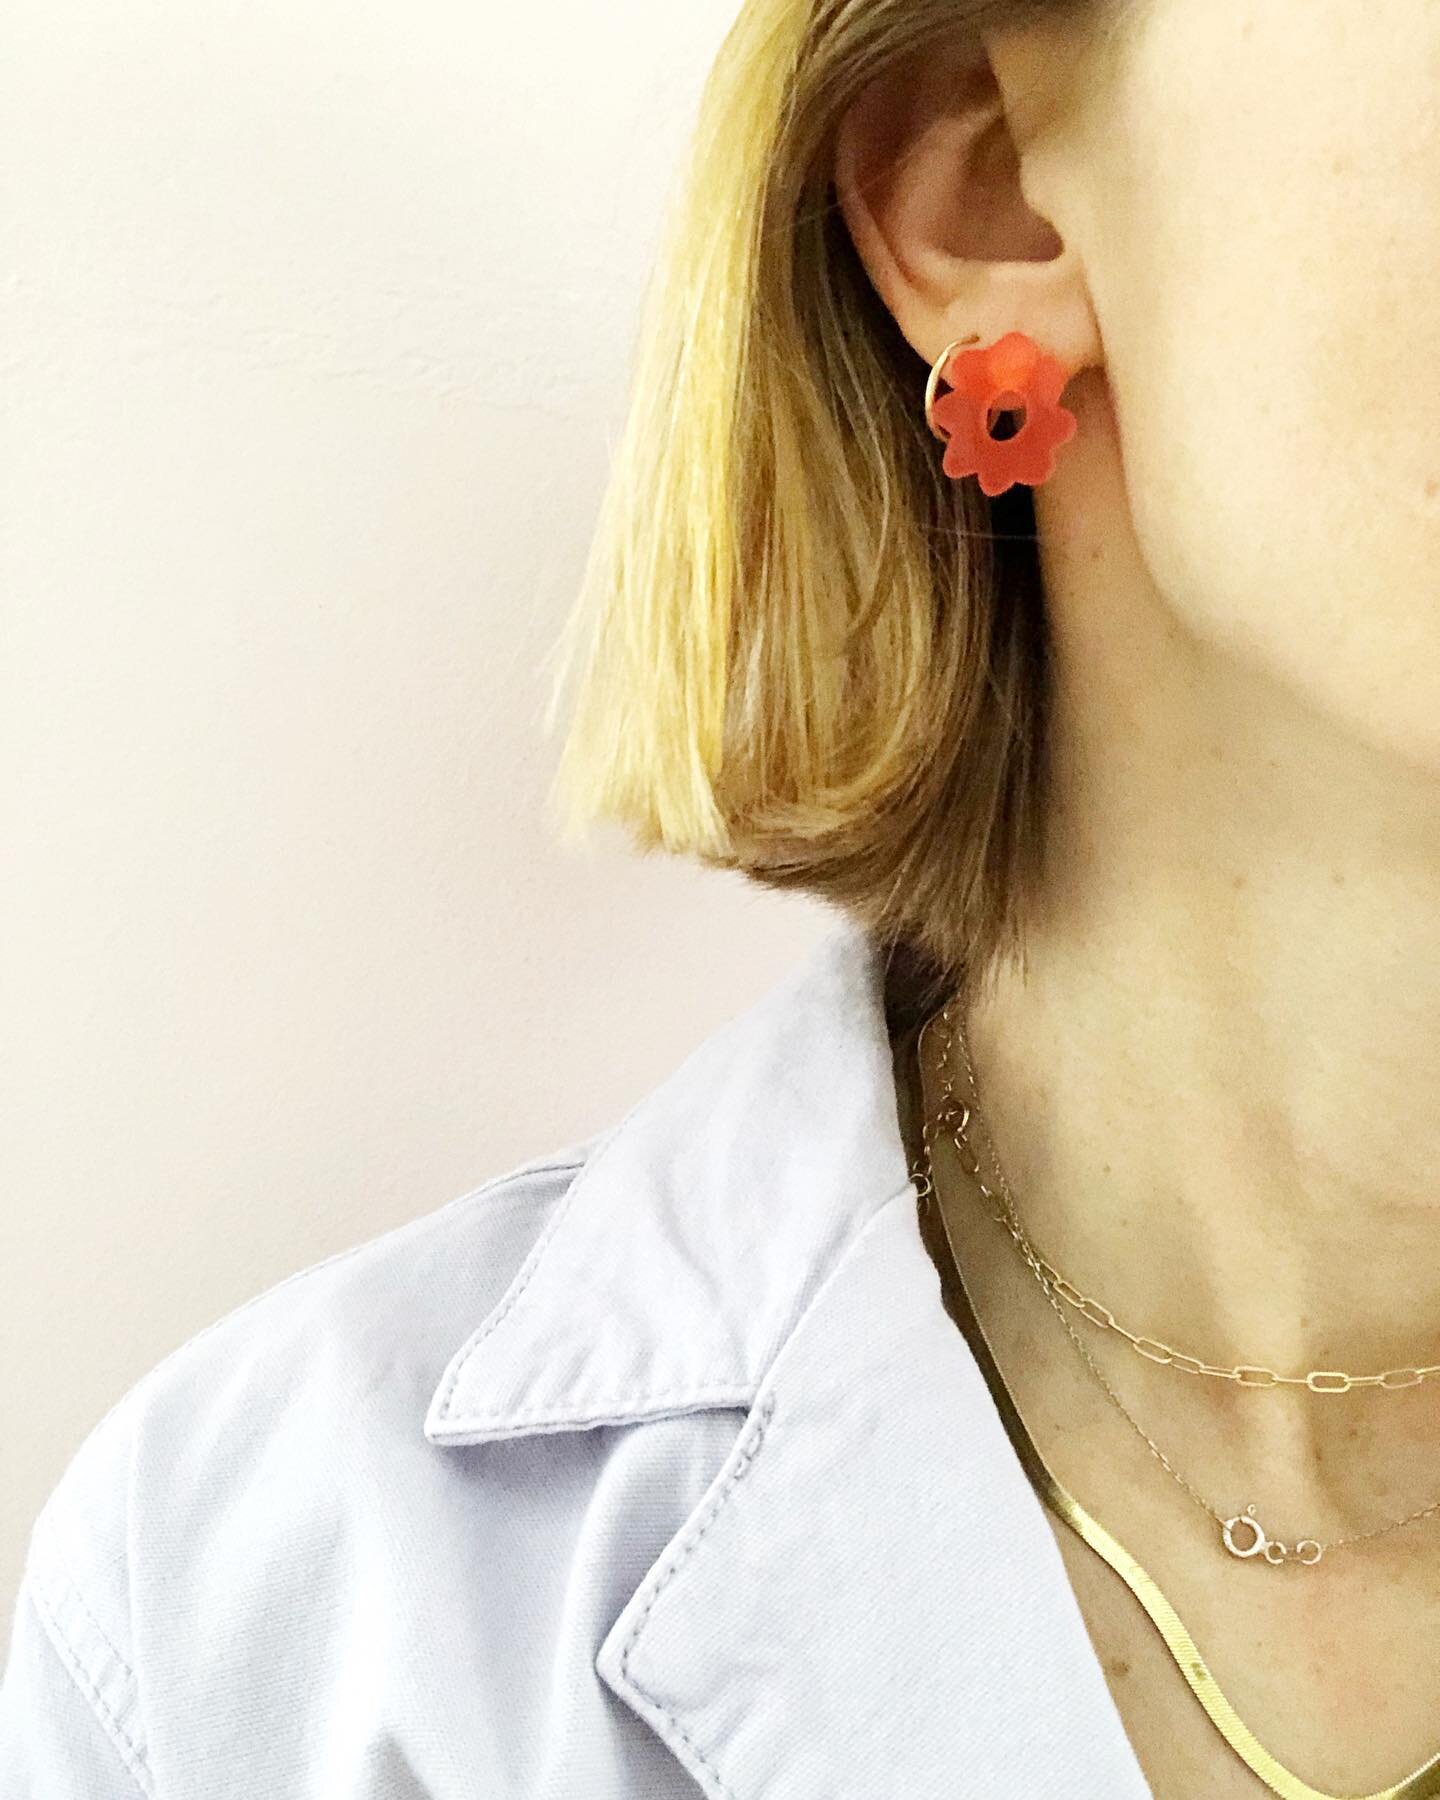 Just listed! Flower earrings in poppy✨